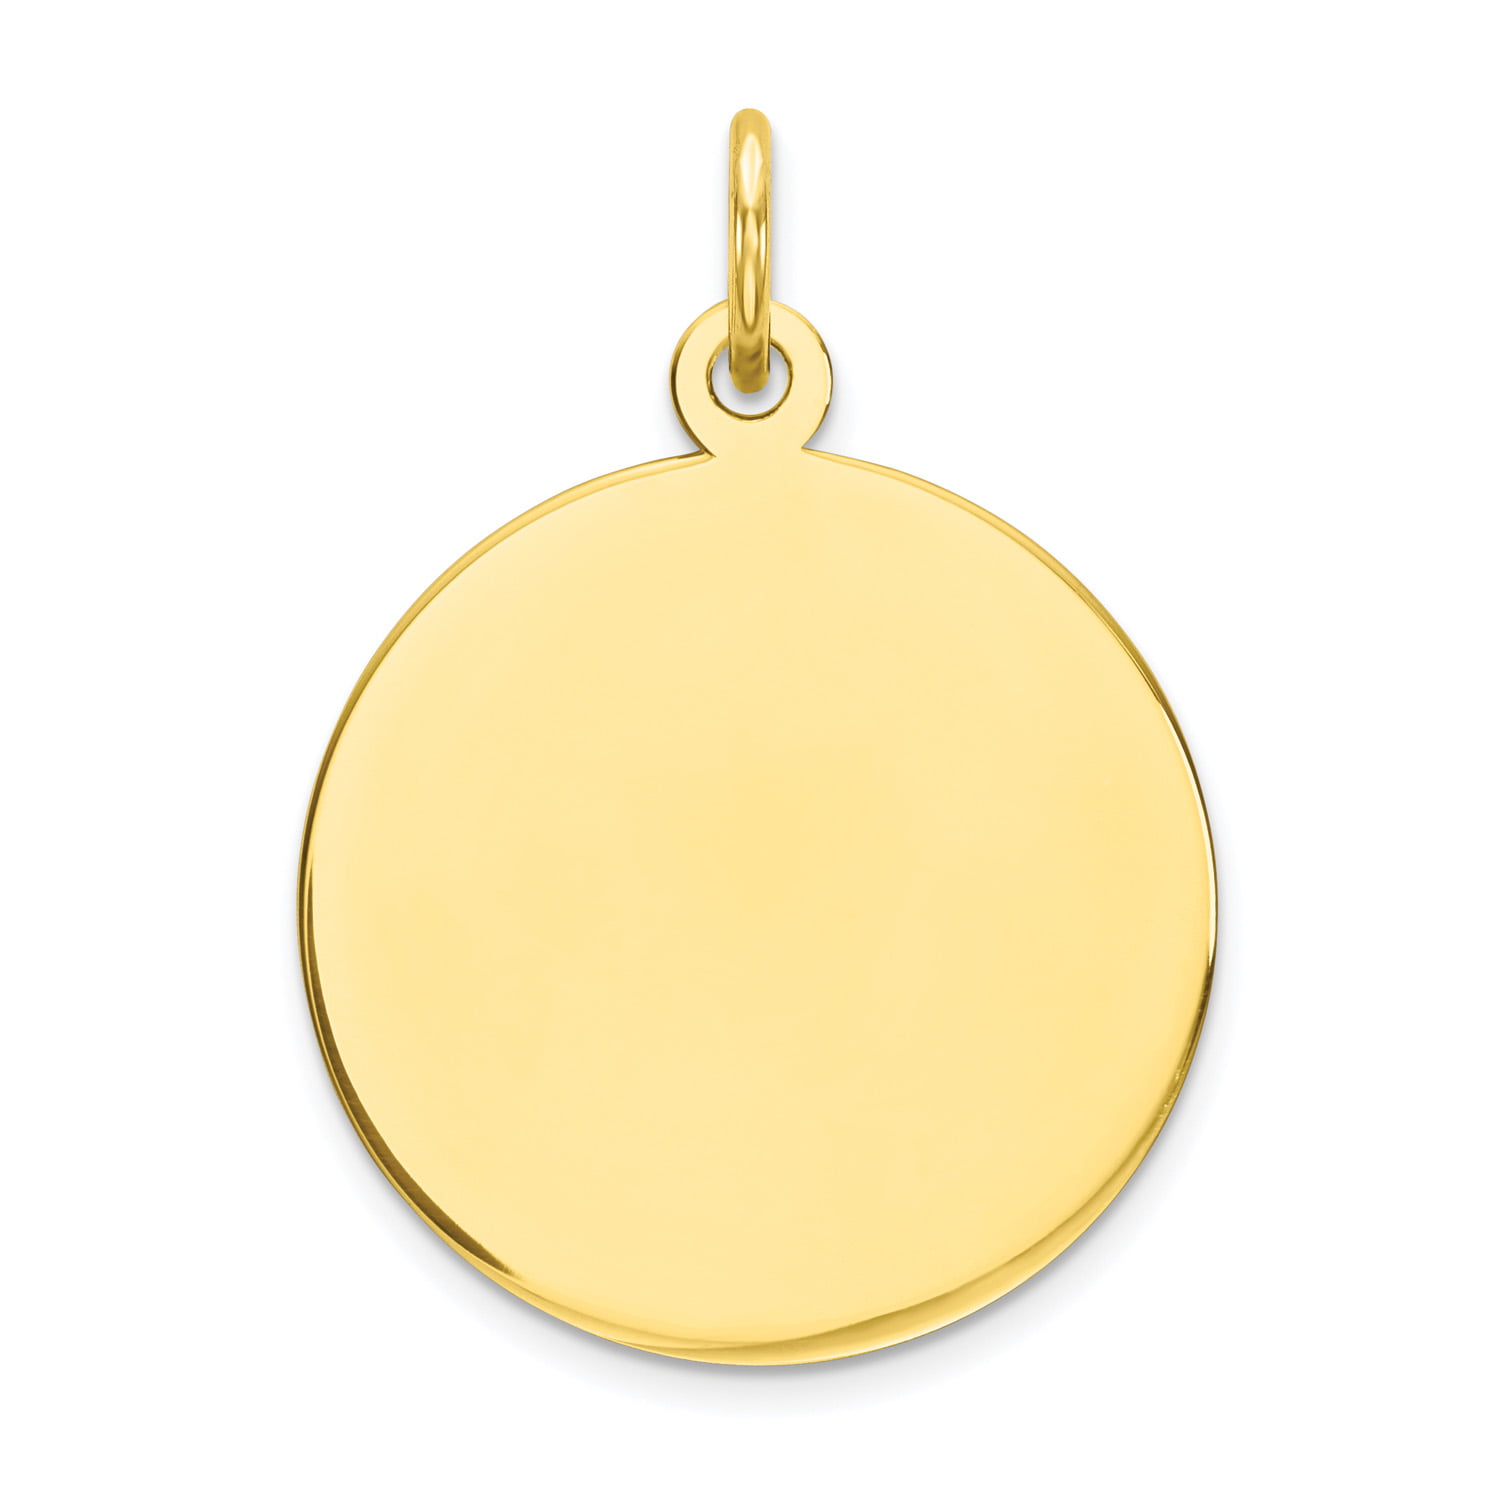 10k Yellow Gold .013 Gauge Heart Shape Disc Polished Charm Pendant 20mmx17mm